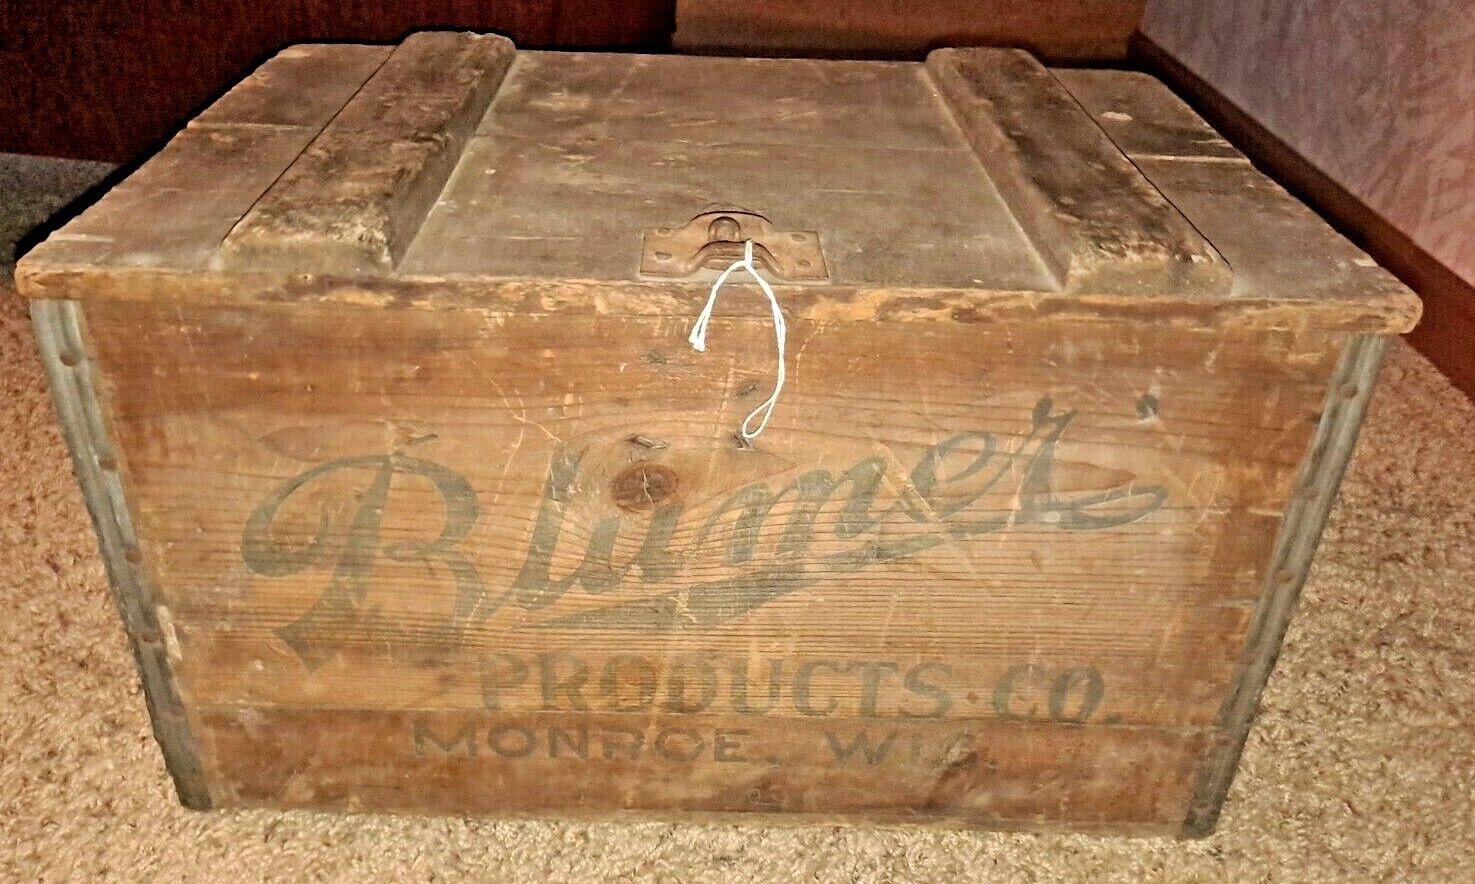 Blumer Products Co Beer Bottle Crate Monroe Wisconsin